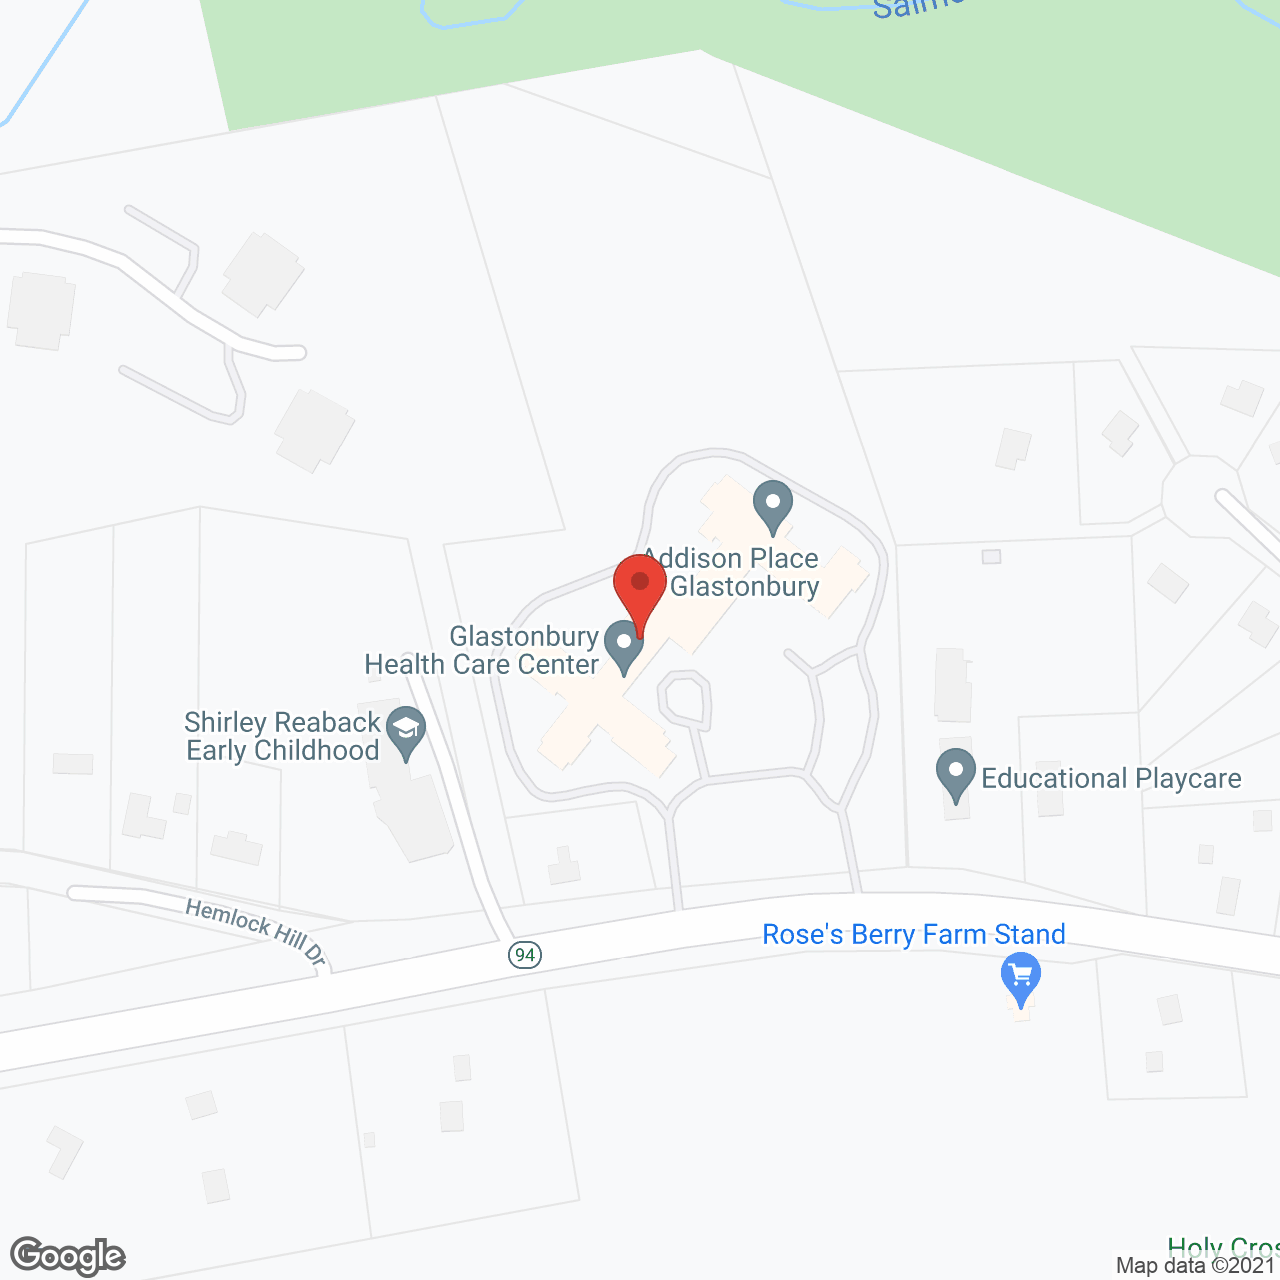 Addison Place at Glastonbury in google map